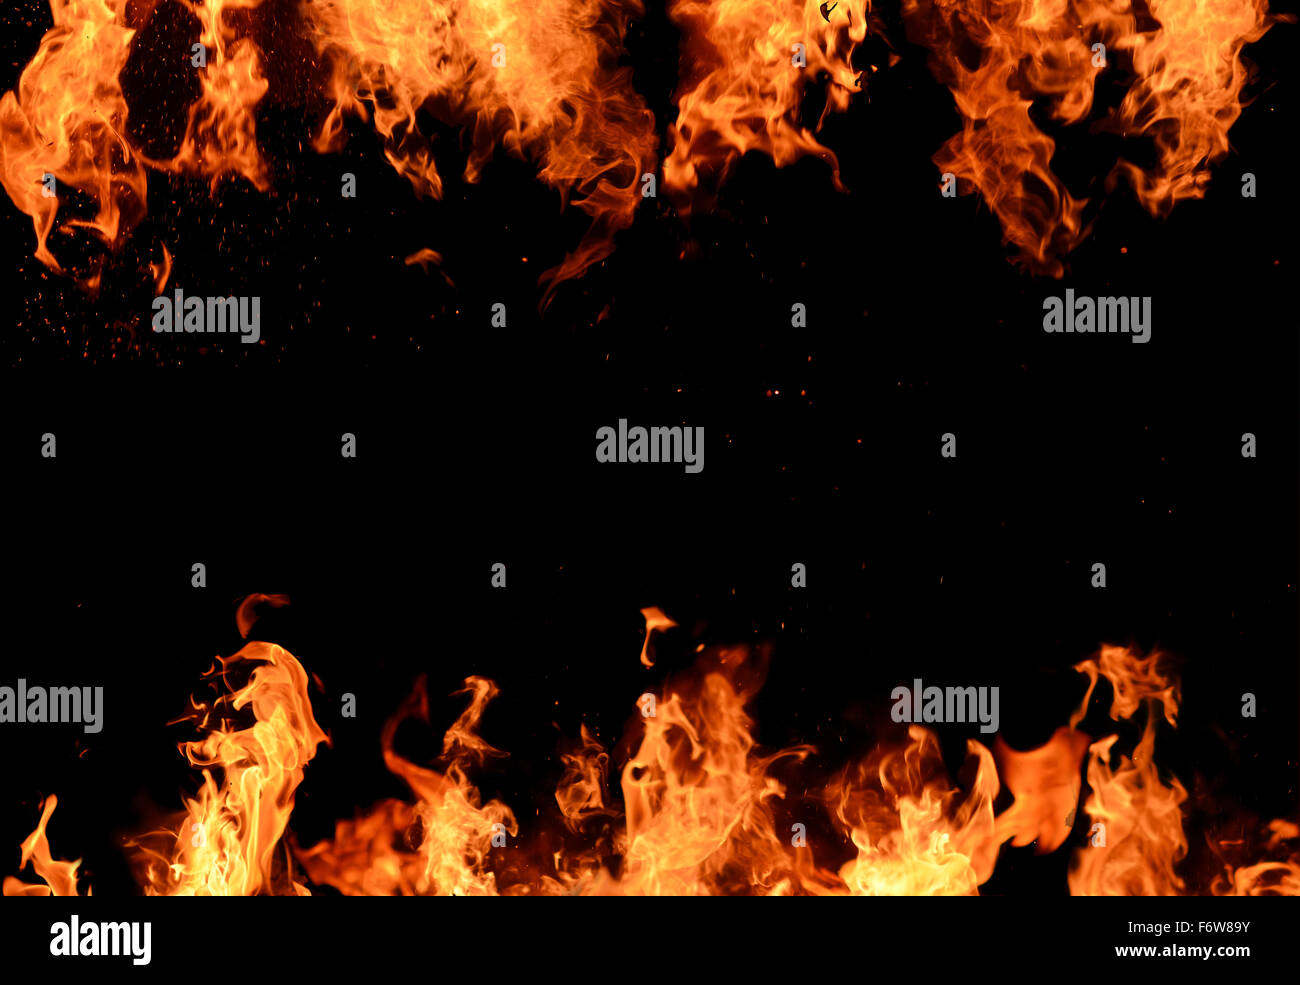 Blazing flames over black background Stock Photo